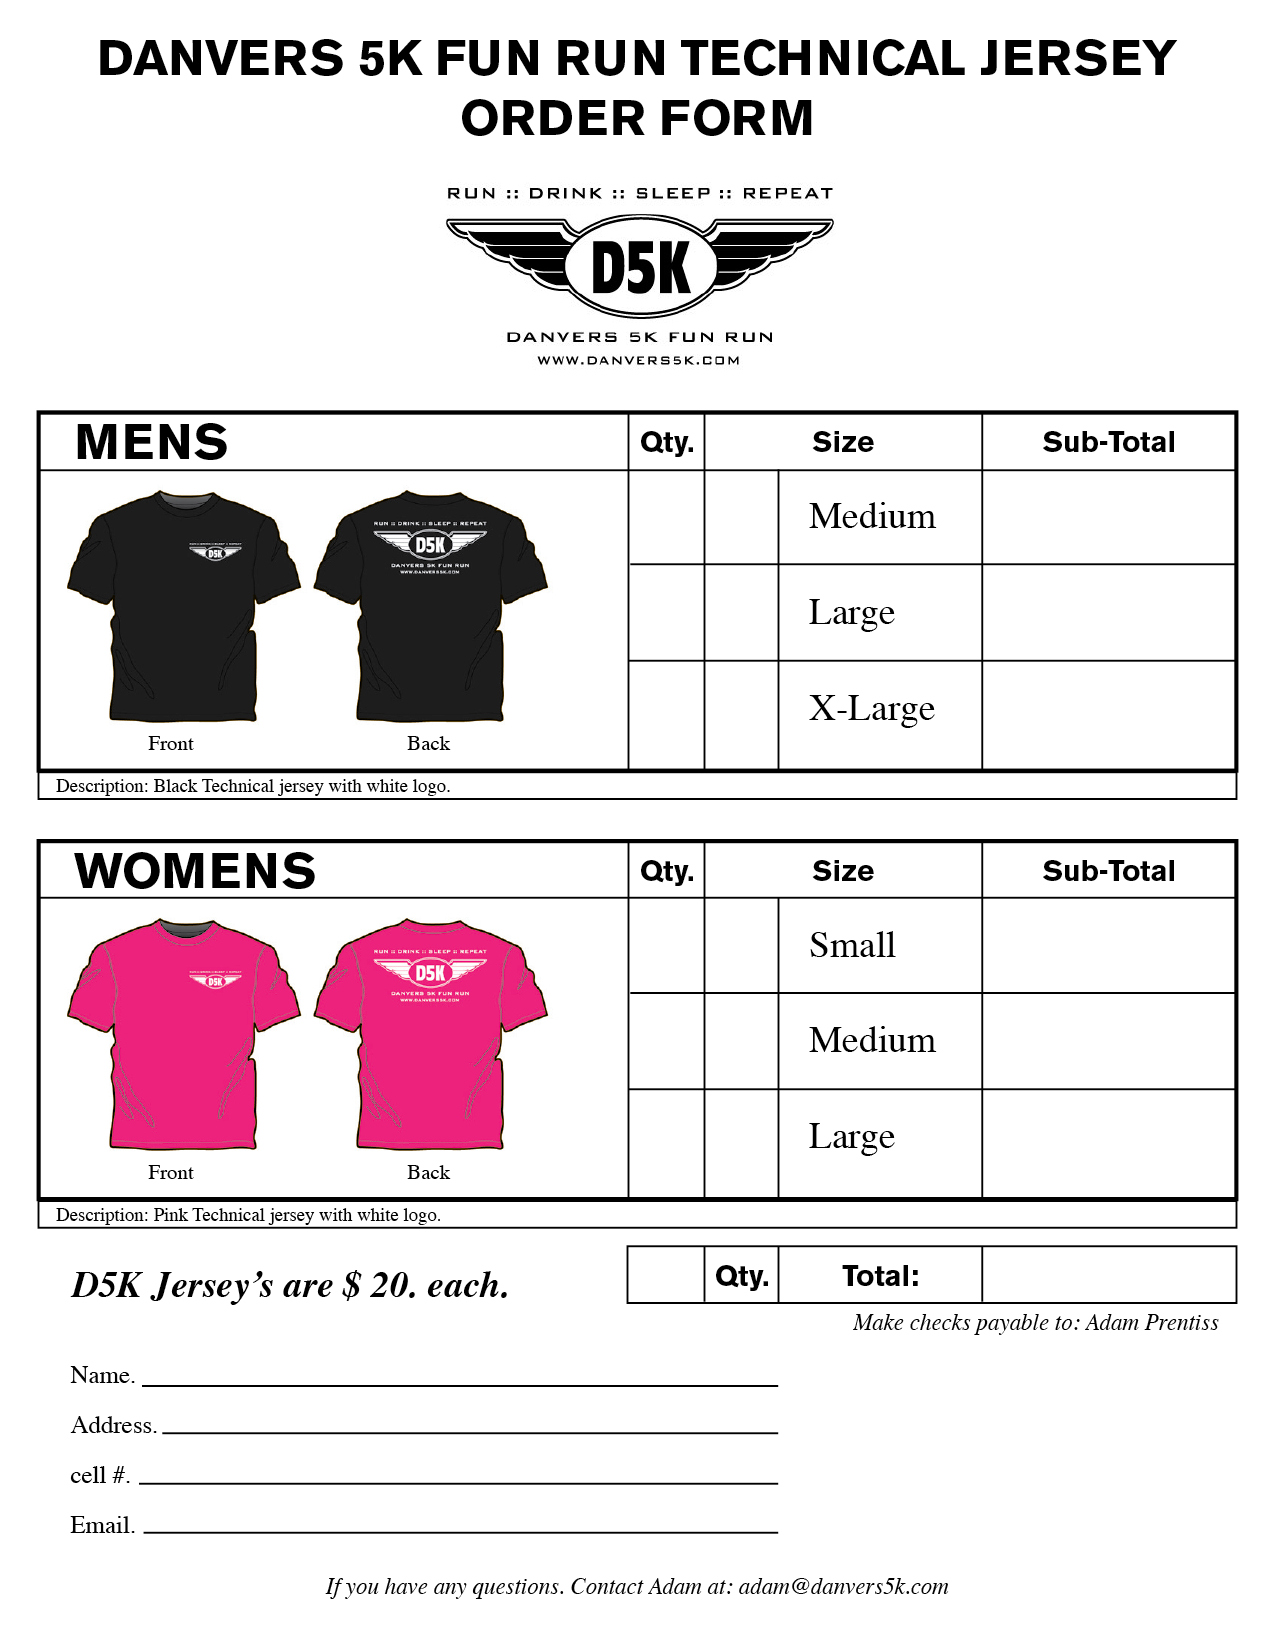 T Shirt Order Forms Printable